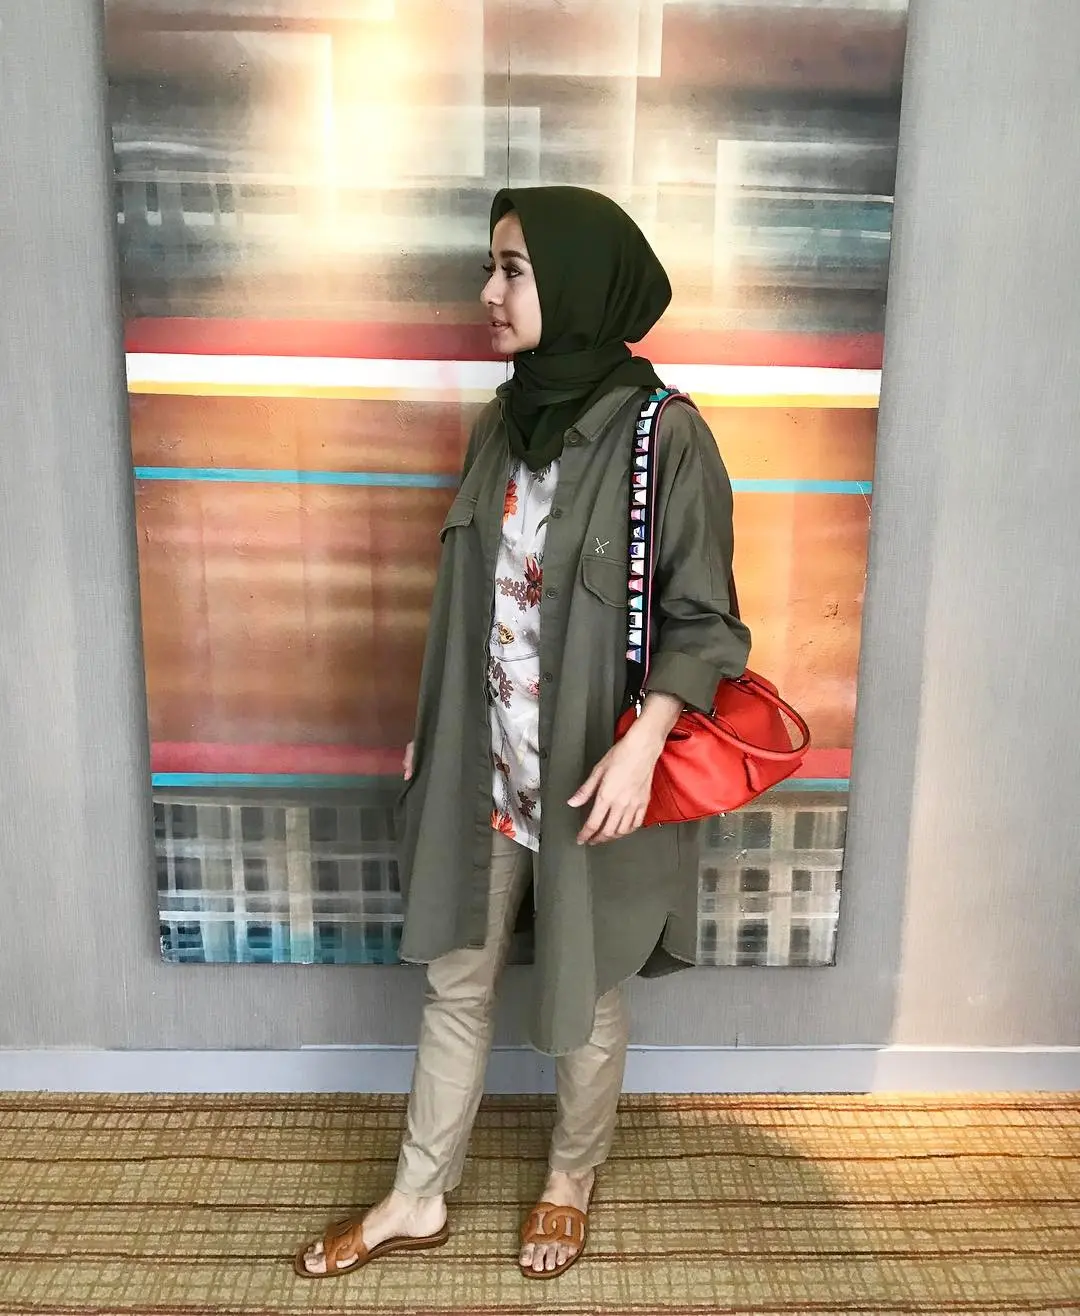 Gaya hijab yang simple dan casual ala selebriti cantik. (sumber foto: @laudyacynthiabella/instagram)